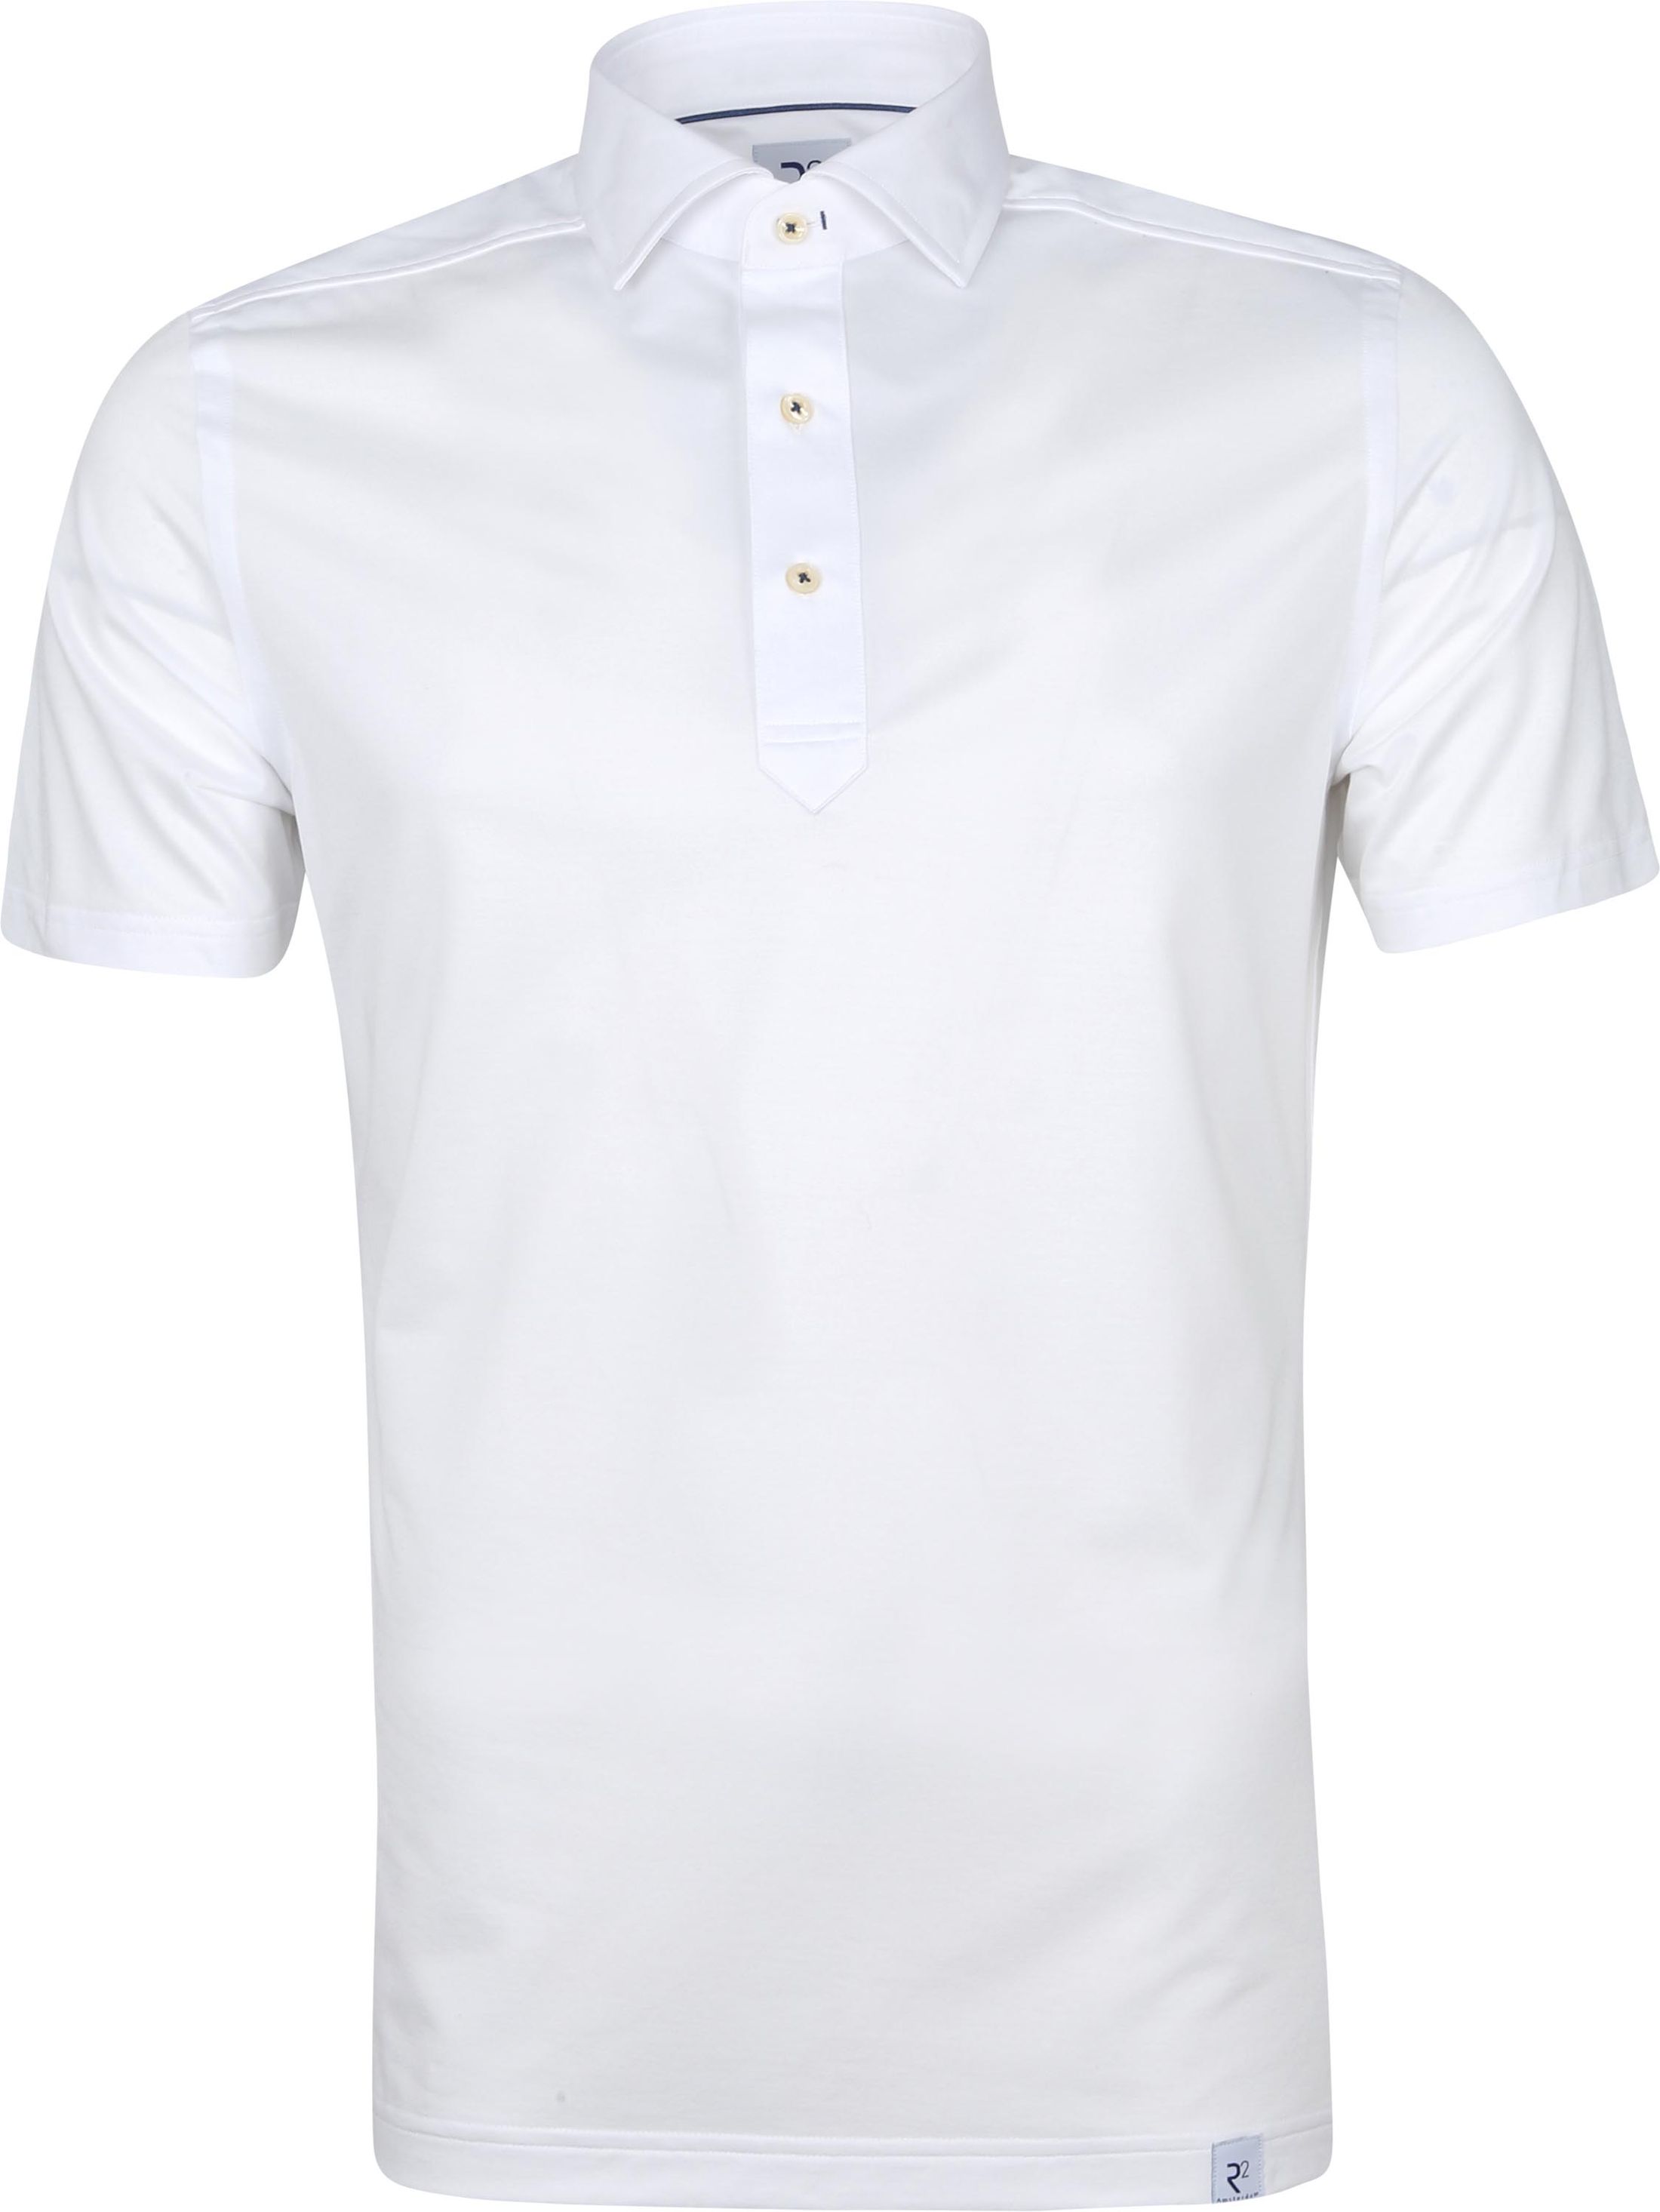 R2 Polo Shirt 112 Pique White size L